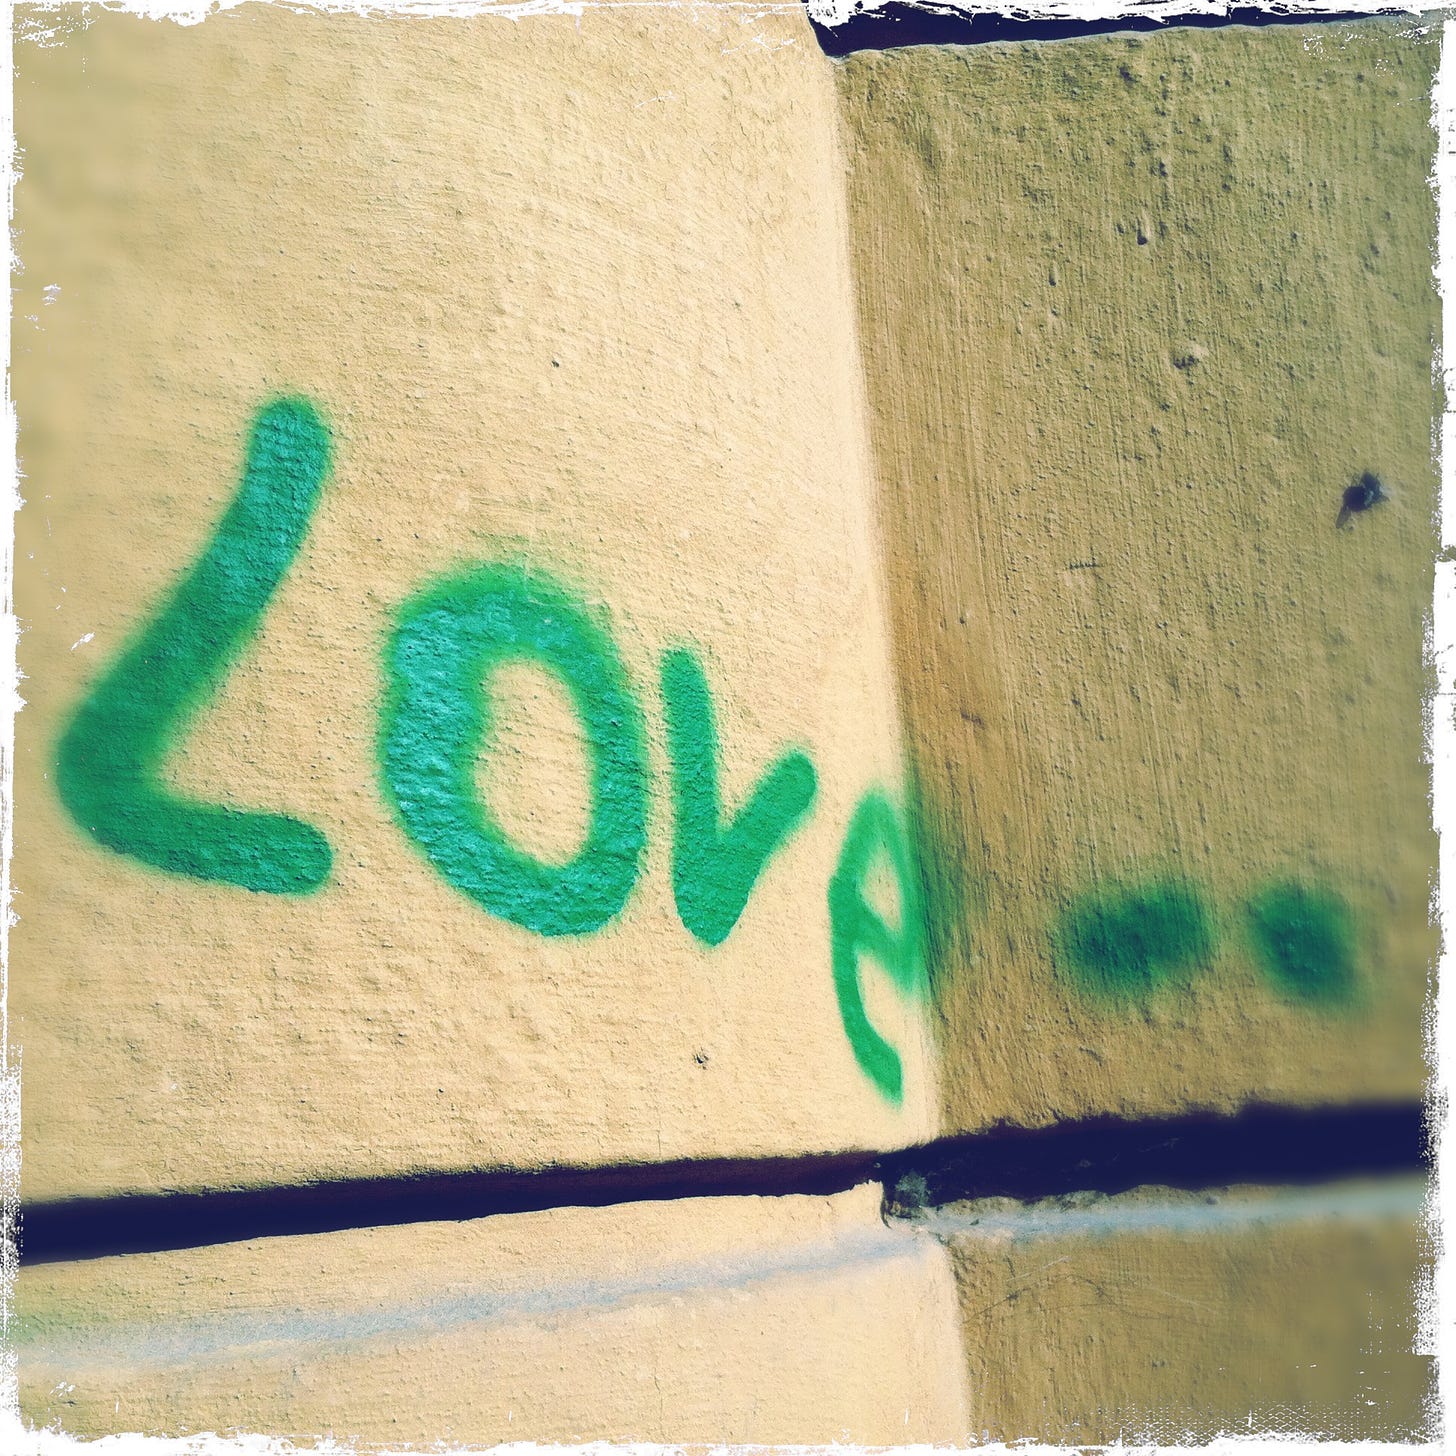 Green spray paint on yellow stone wall reading Love